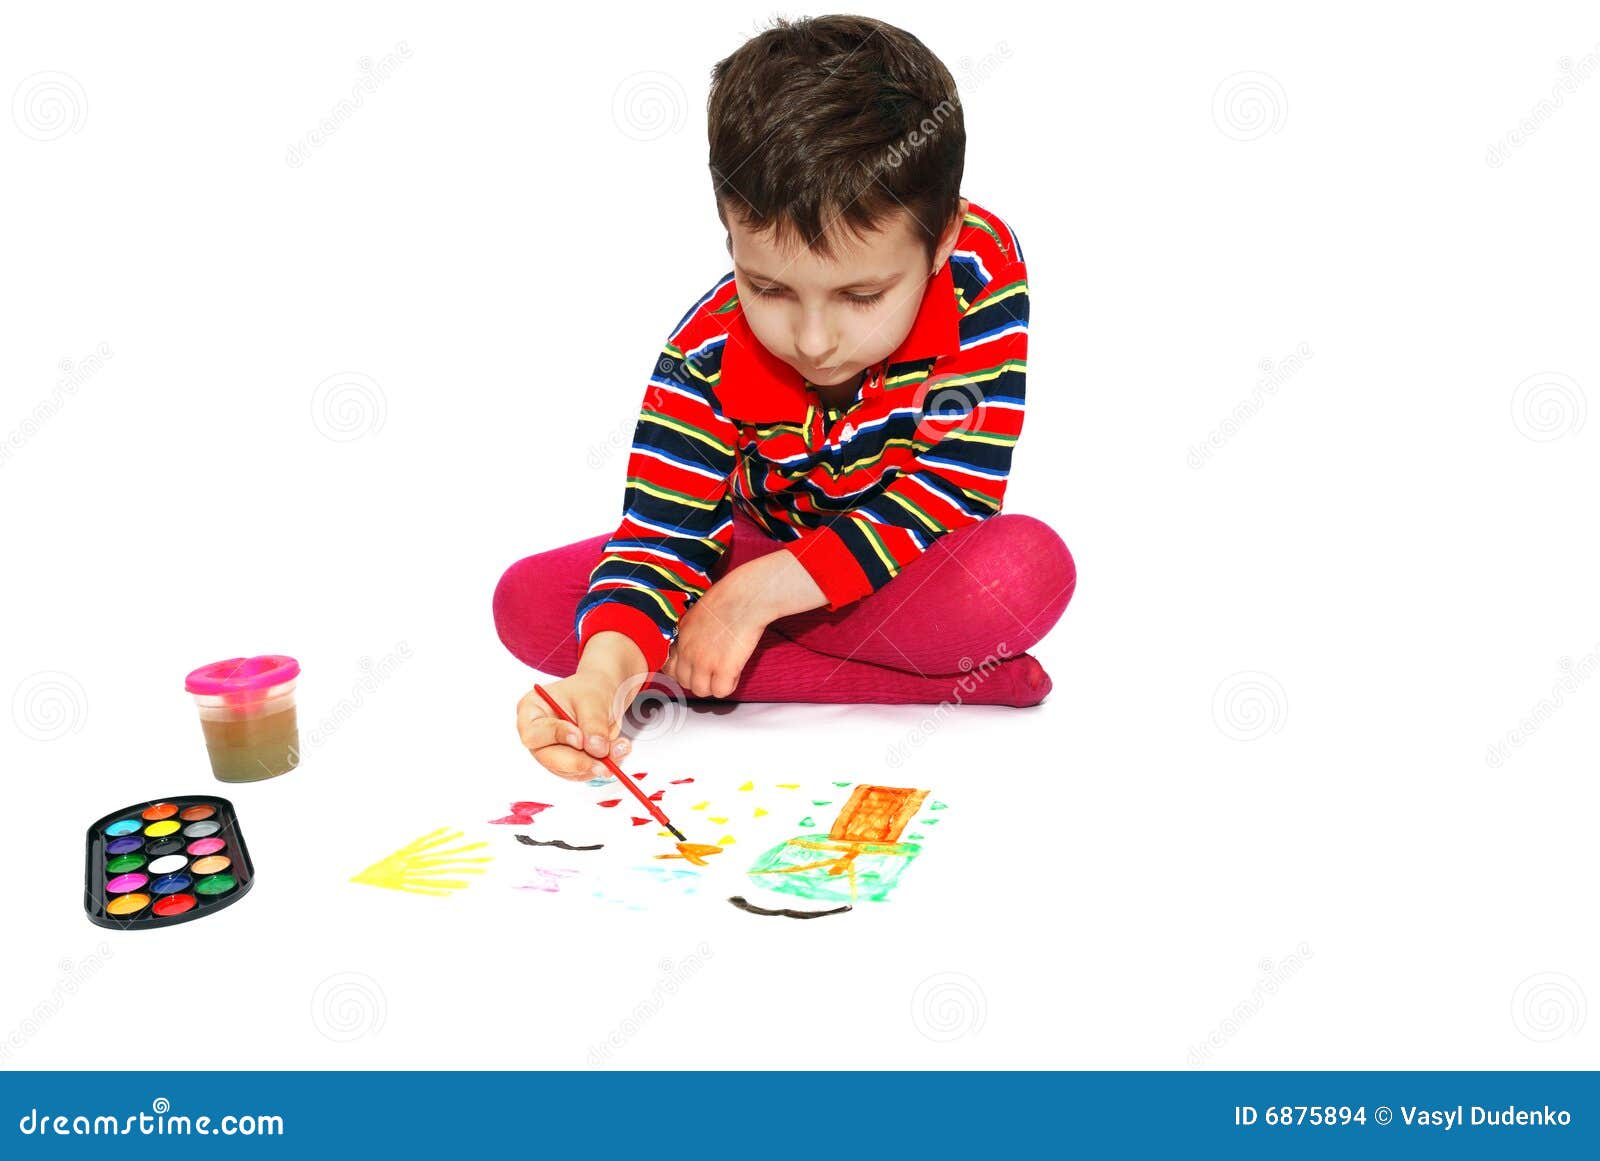 Kid paint image by paints stock photo. Image of idea, open - 6875894